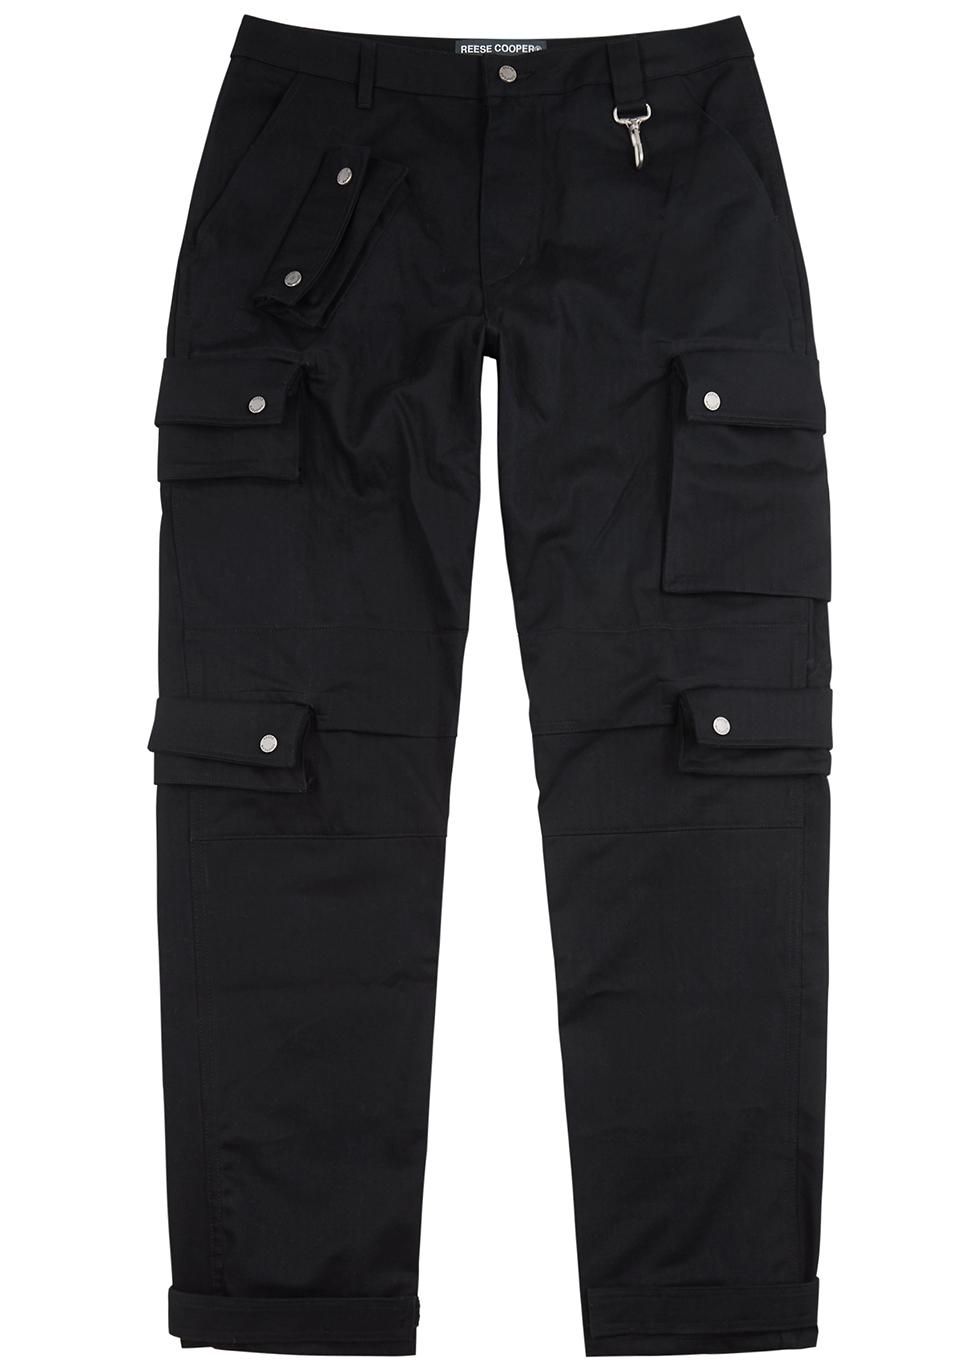 Black herringbone cotton cargo trousers by REESE COOPER